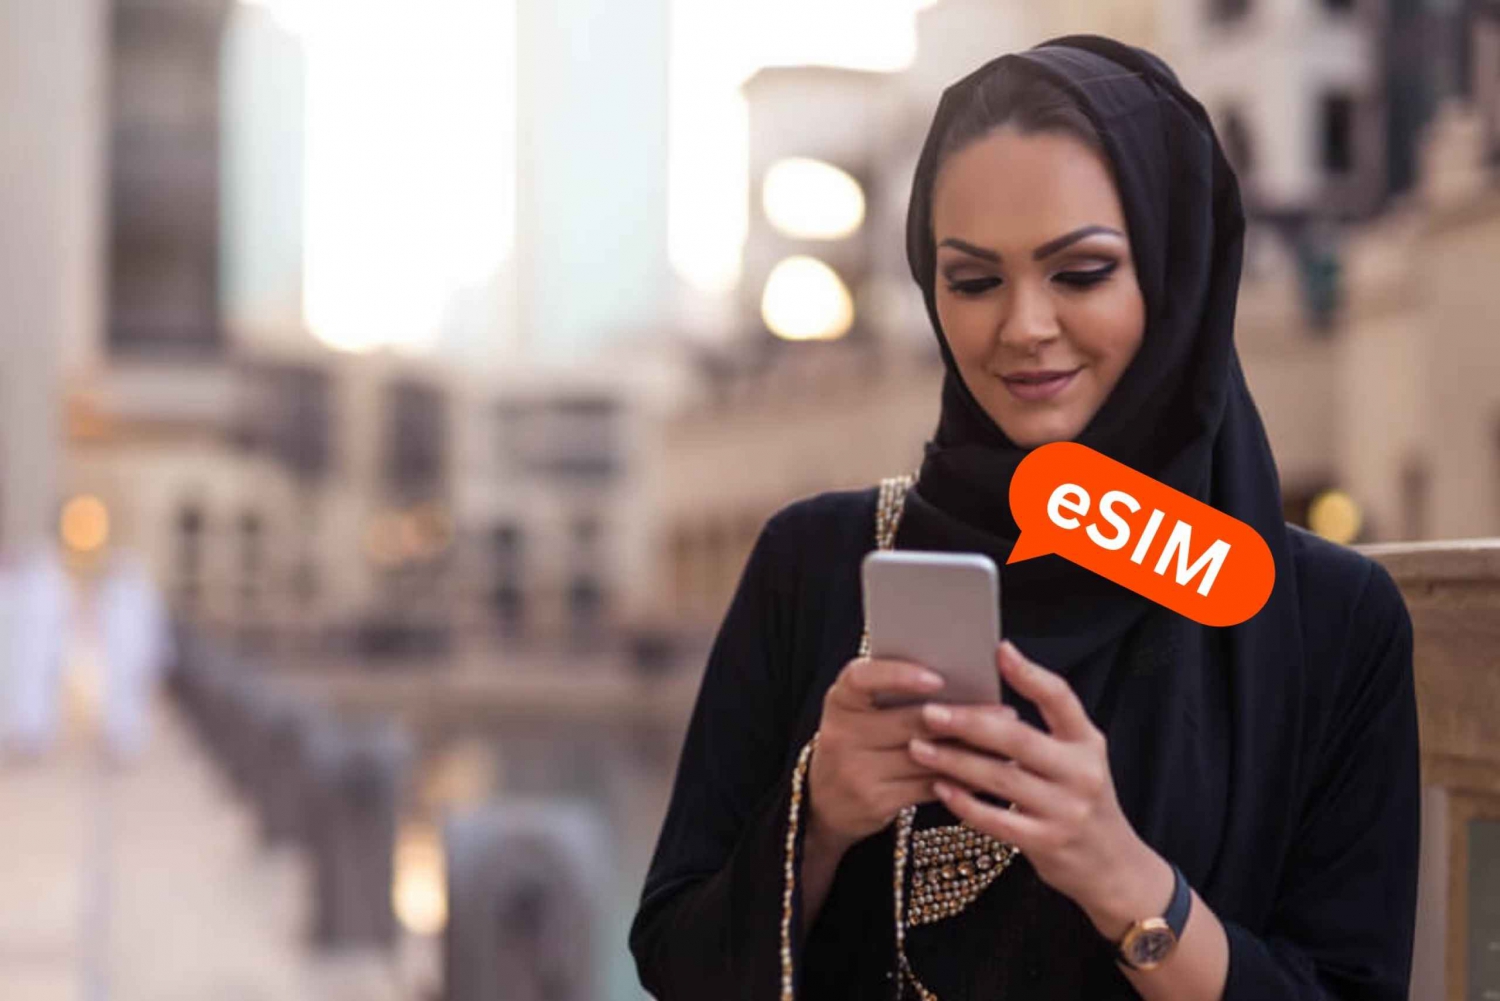 Mecca: piano dati in roaming eSIM in Arabia Saudita per i viaggiatori